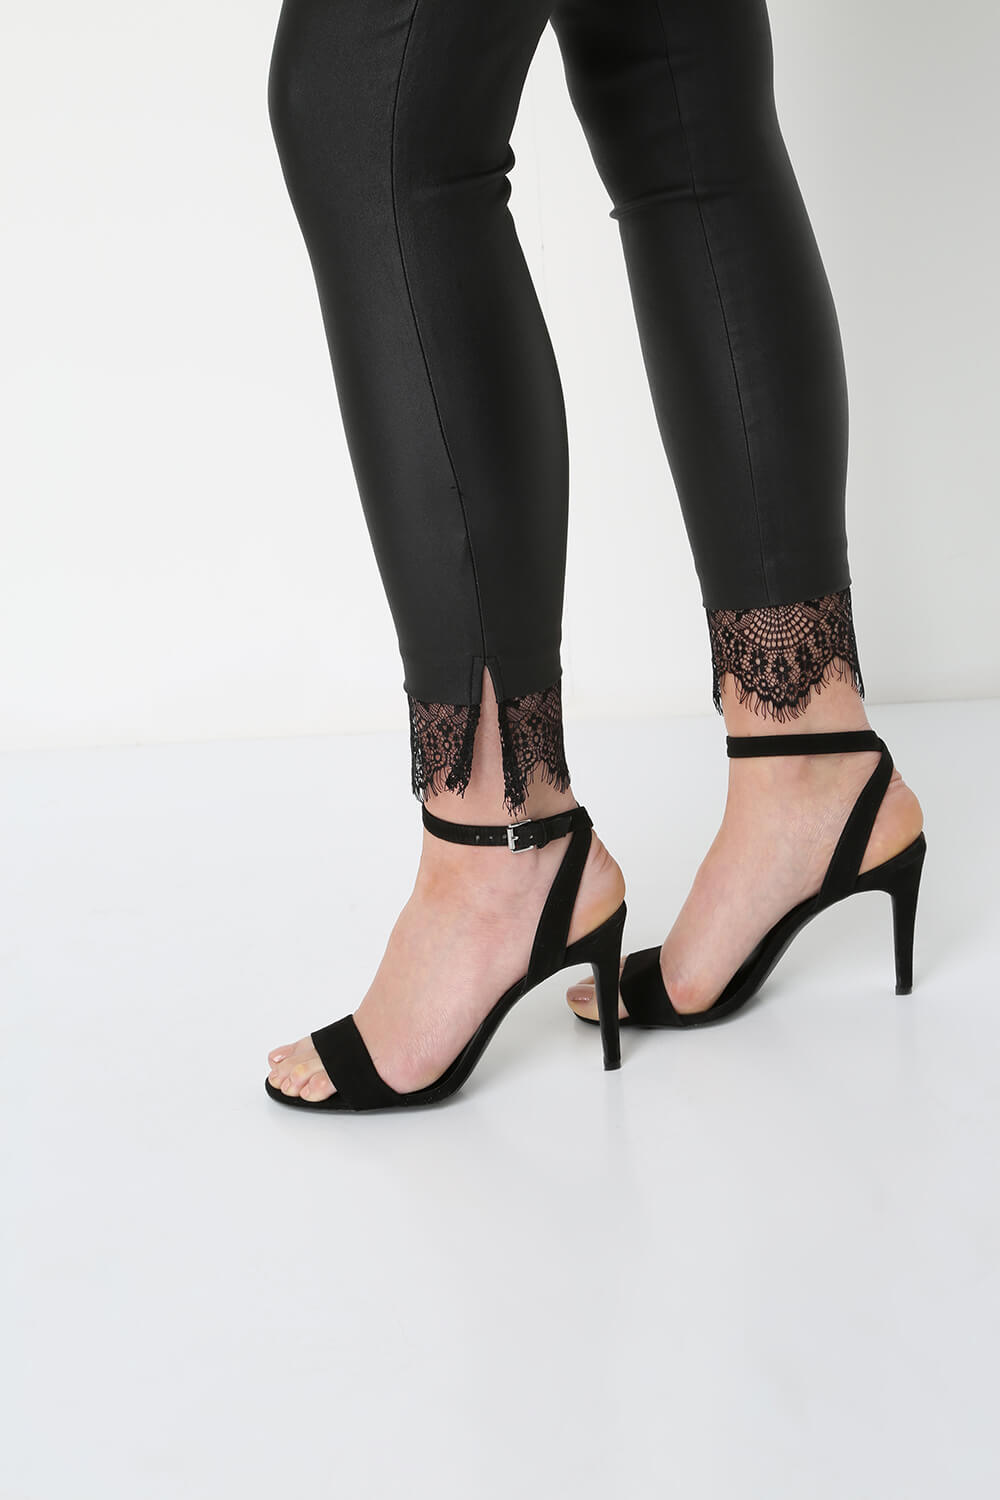 Black Faux Leather Lace Hem Leggings, Image 3 of 4